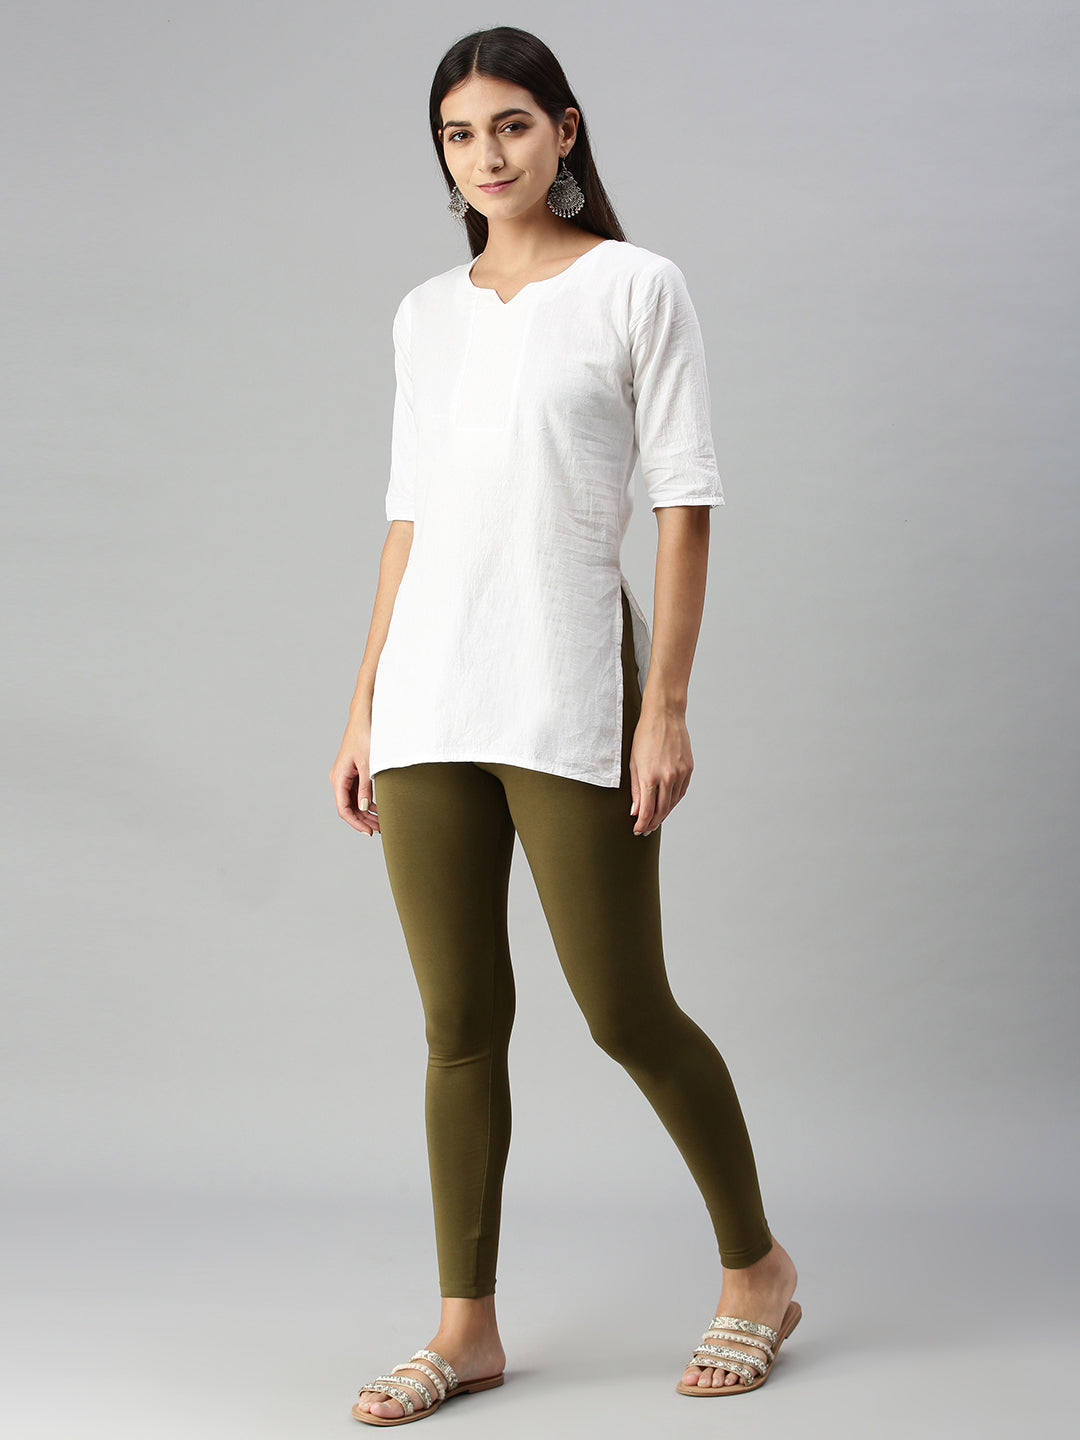 Women's Tank Top and Legging Loungewear, 2-Piece Set - Walmart.com